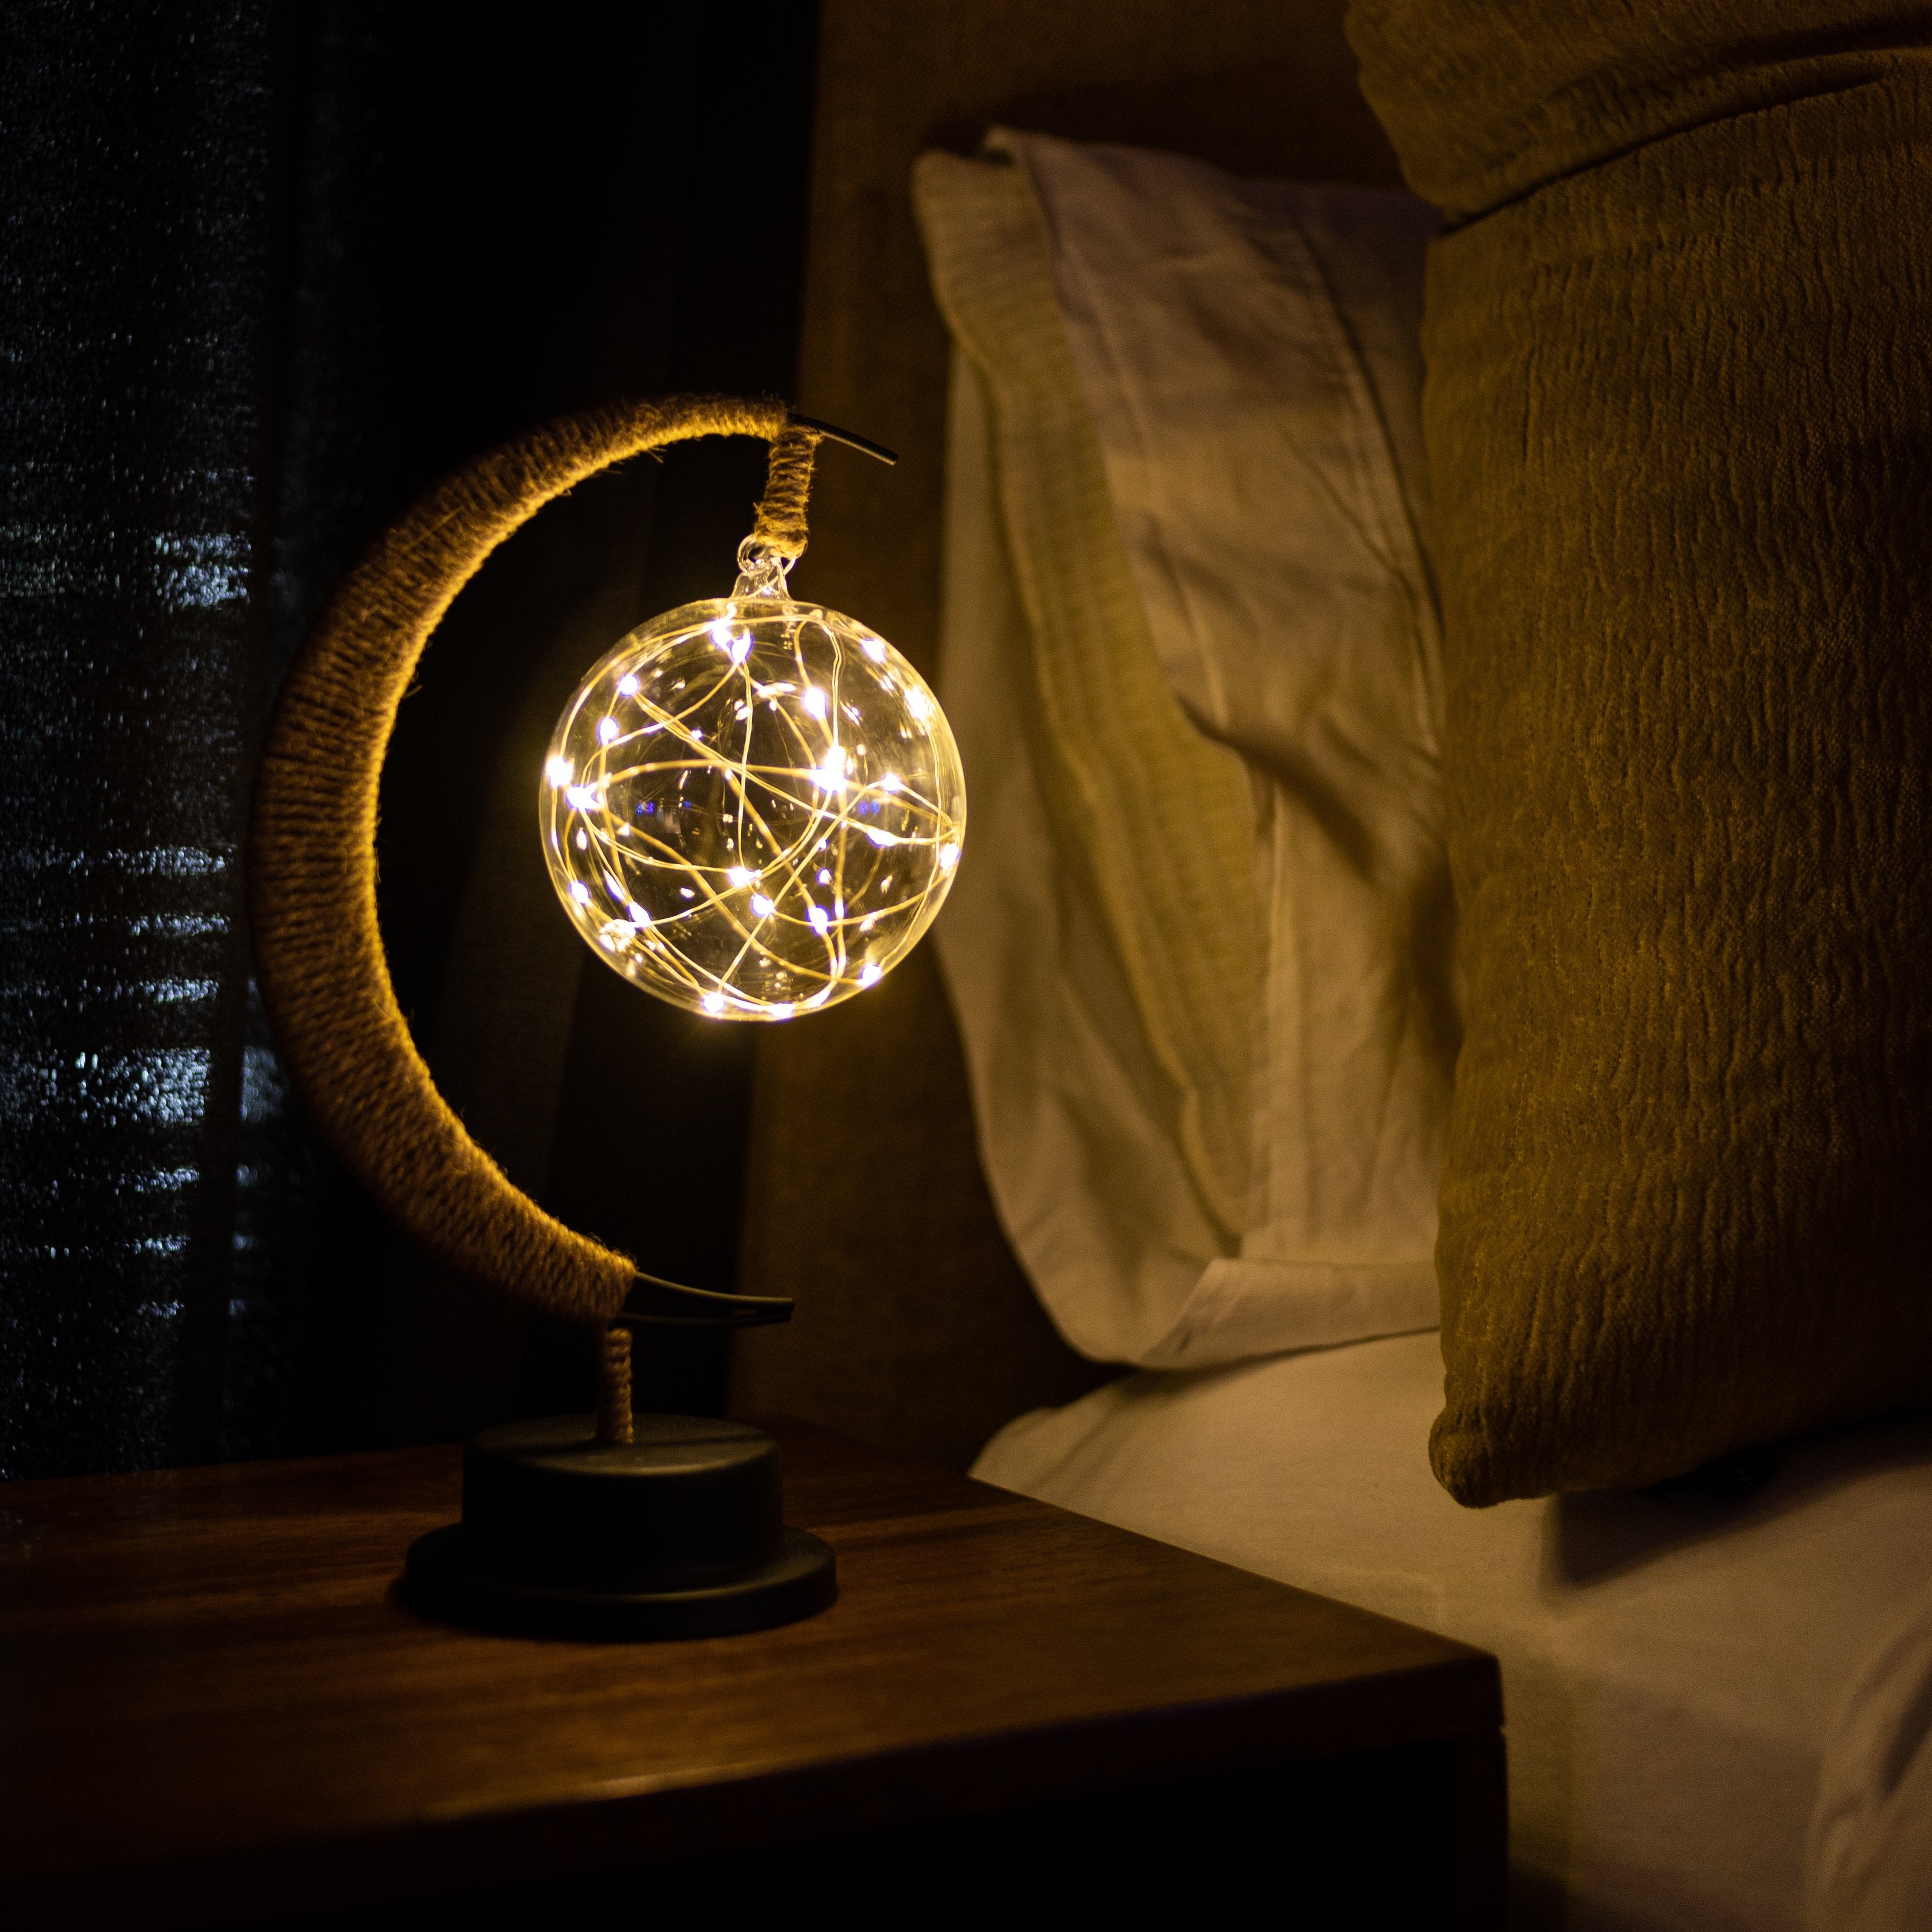 The Enchanted Lunar LED Lamp